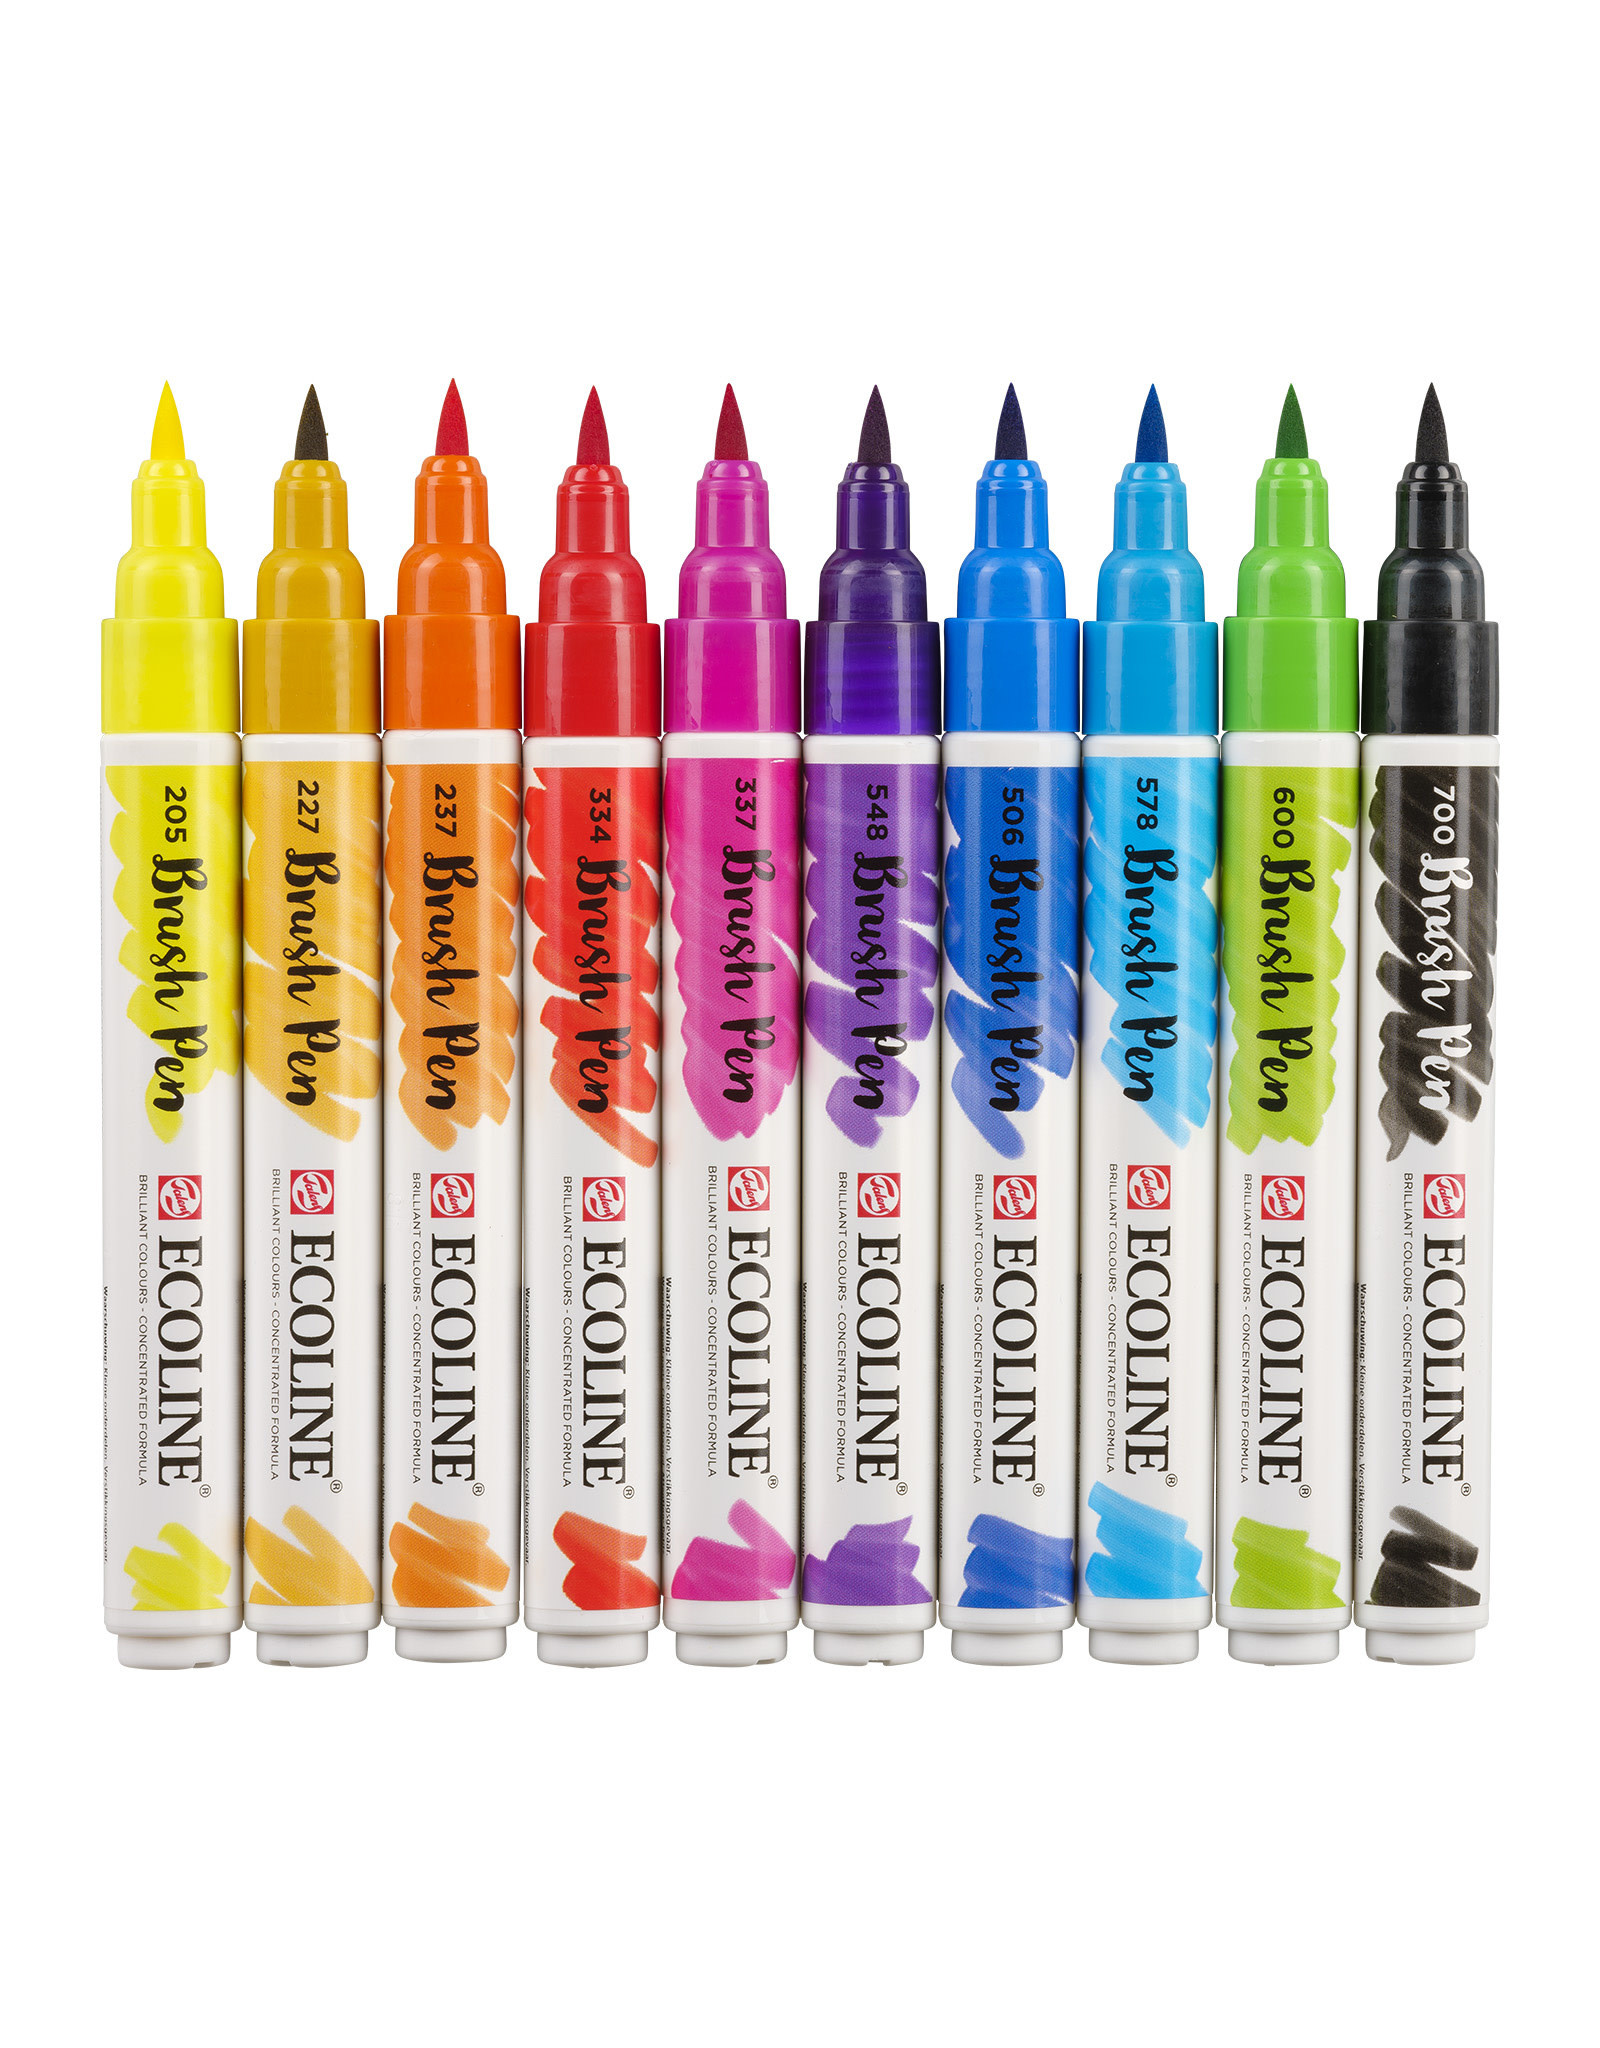 Royal Talens Ecoline Watercolour Brush Pen, Basic Set of 10